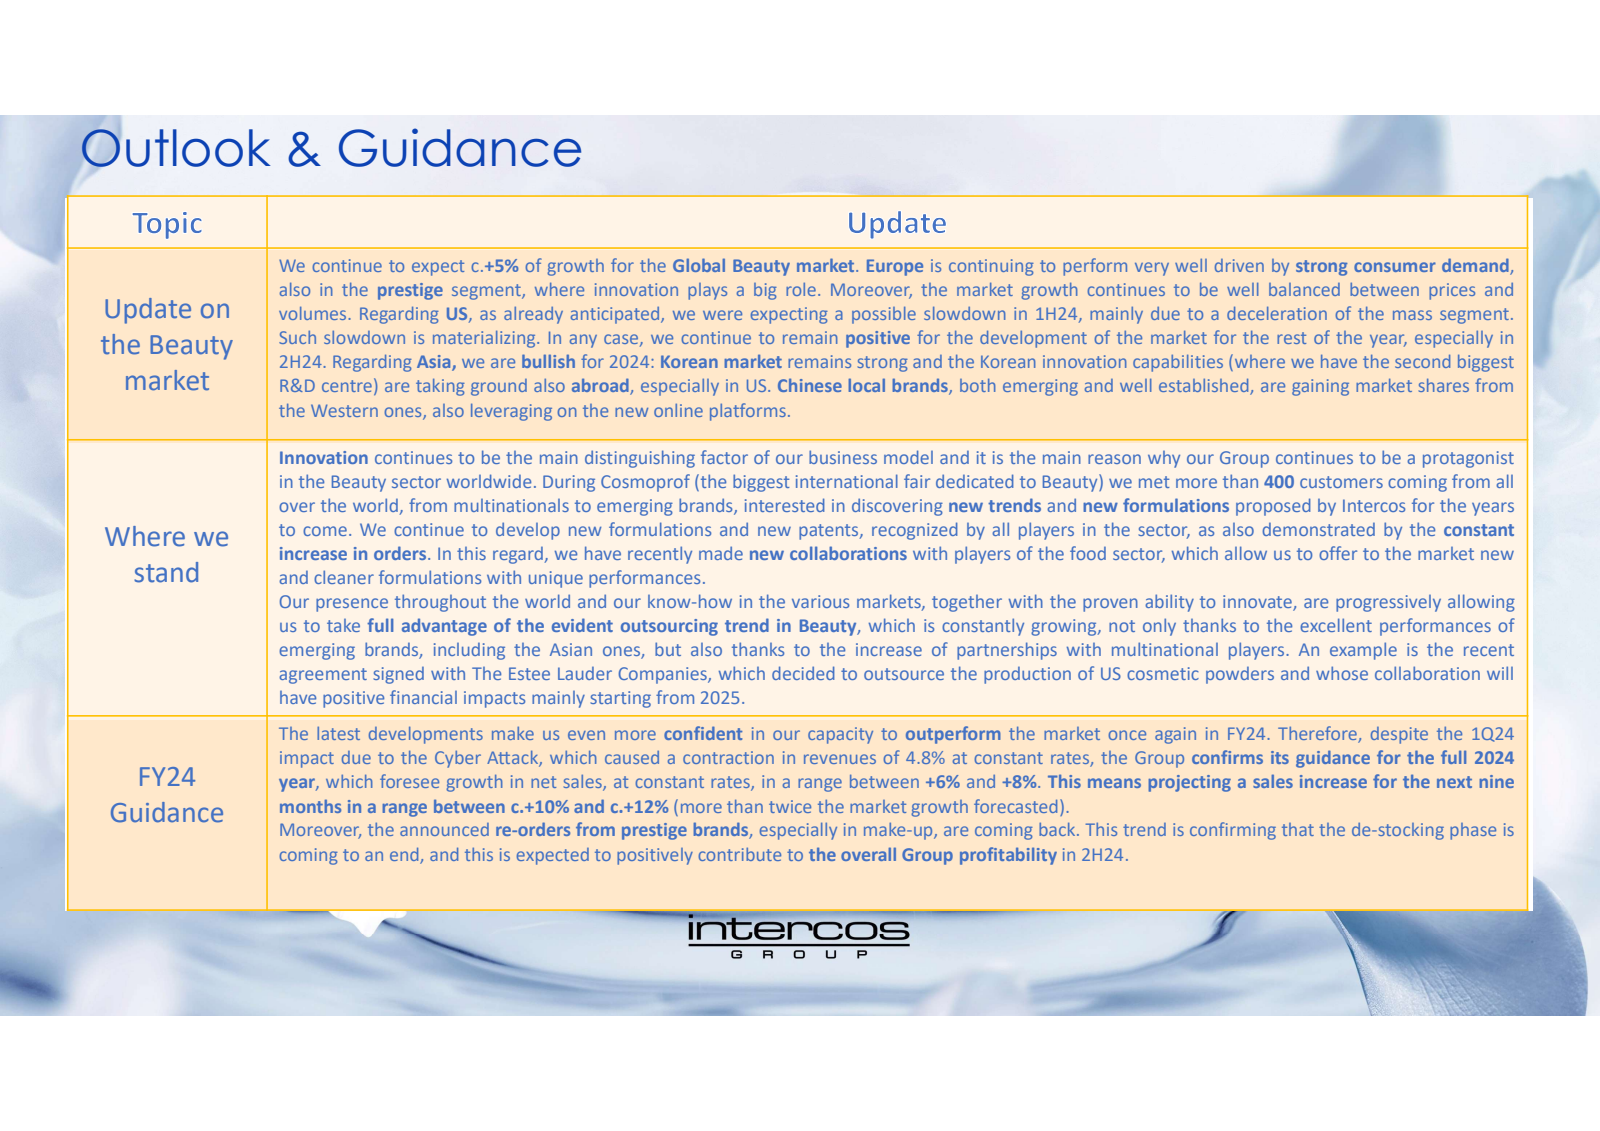 Outlook & Guidance 
